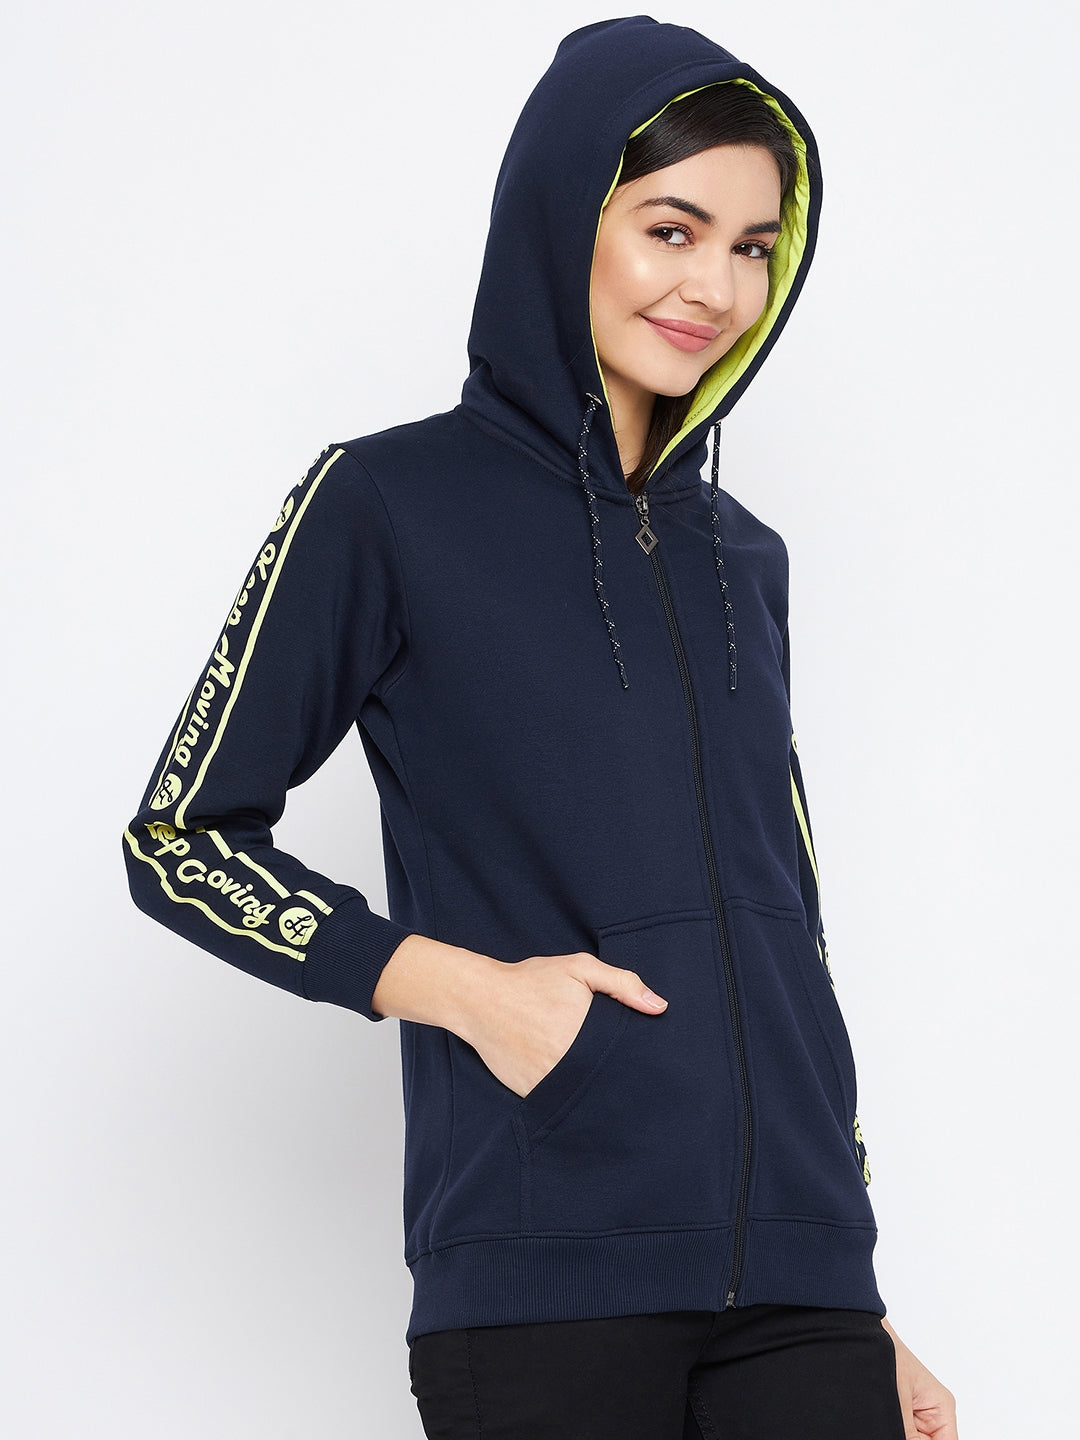 Livfree women Full Zipper Hooded Sweatshirt with typographic Fancy Tape on Sleeves- Navy